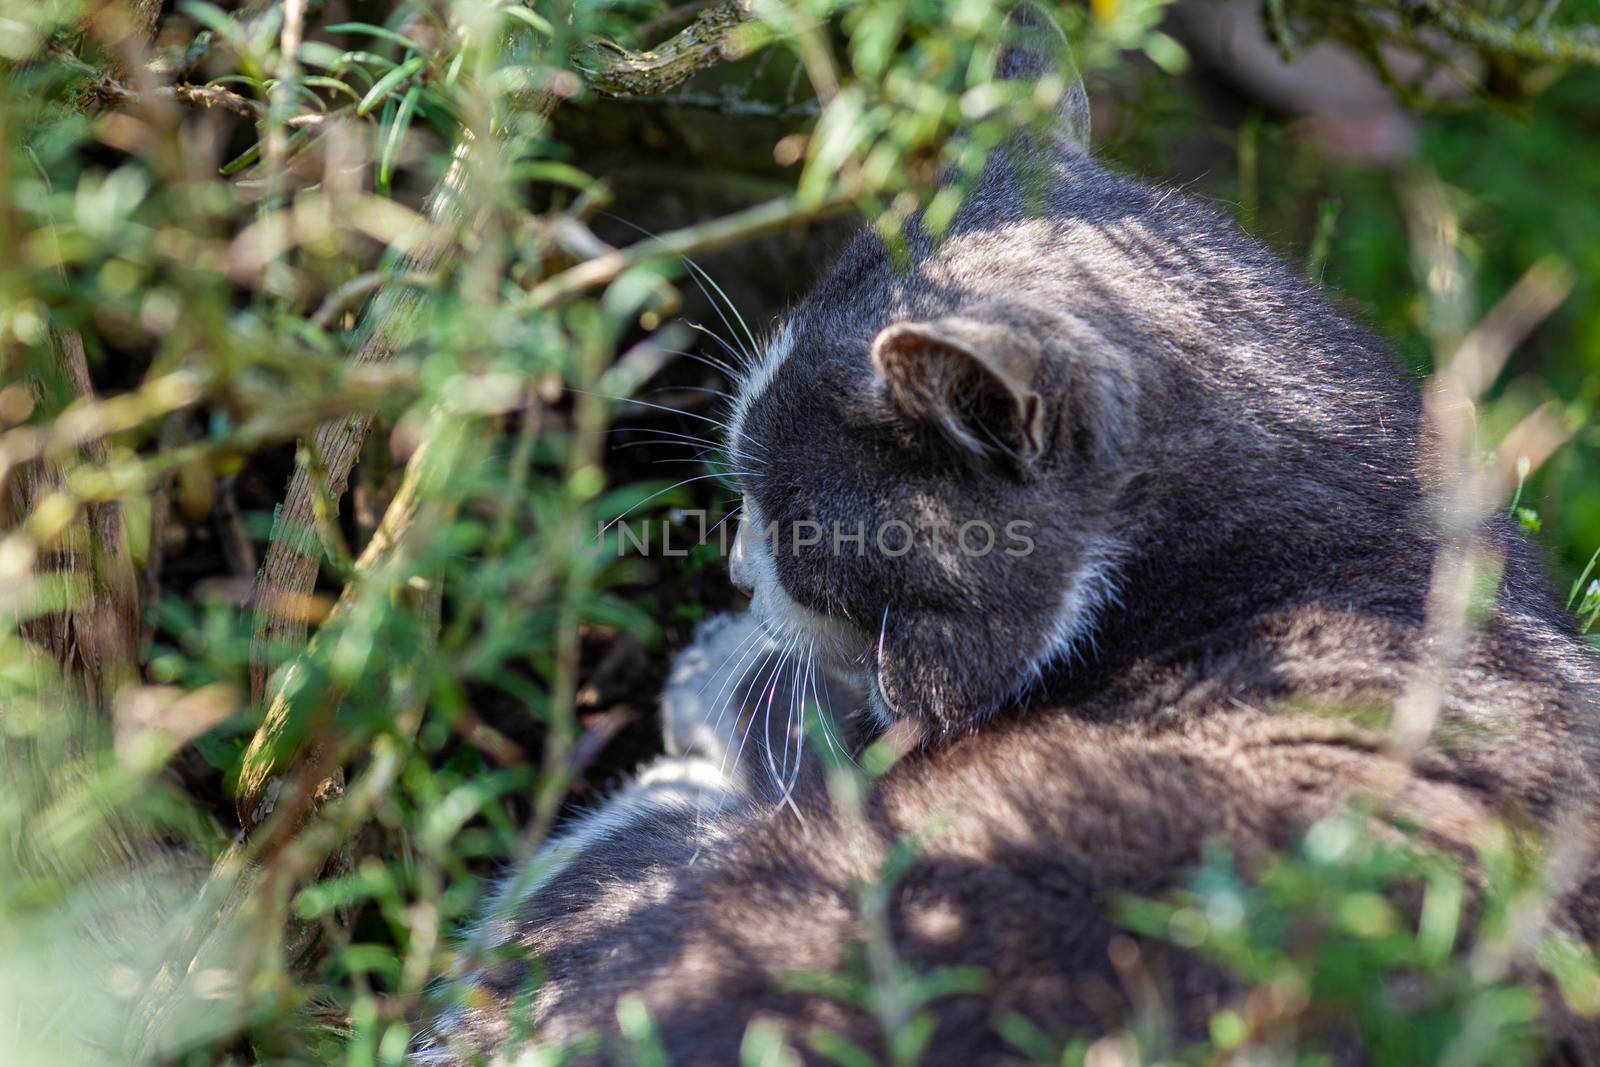 Cute cat sleeps nestled among the plants in the garden